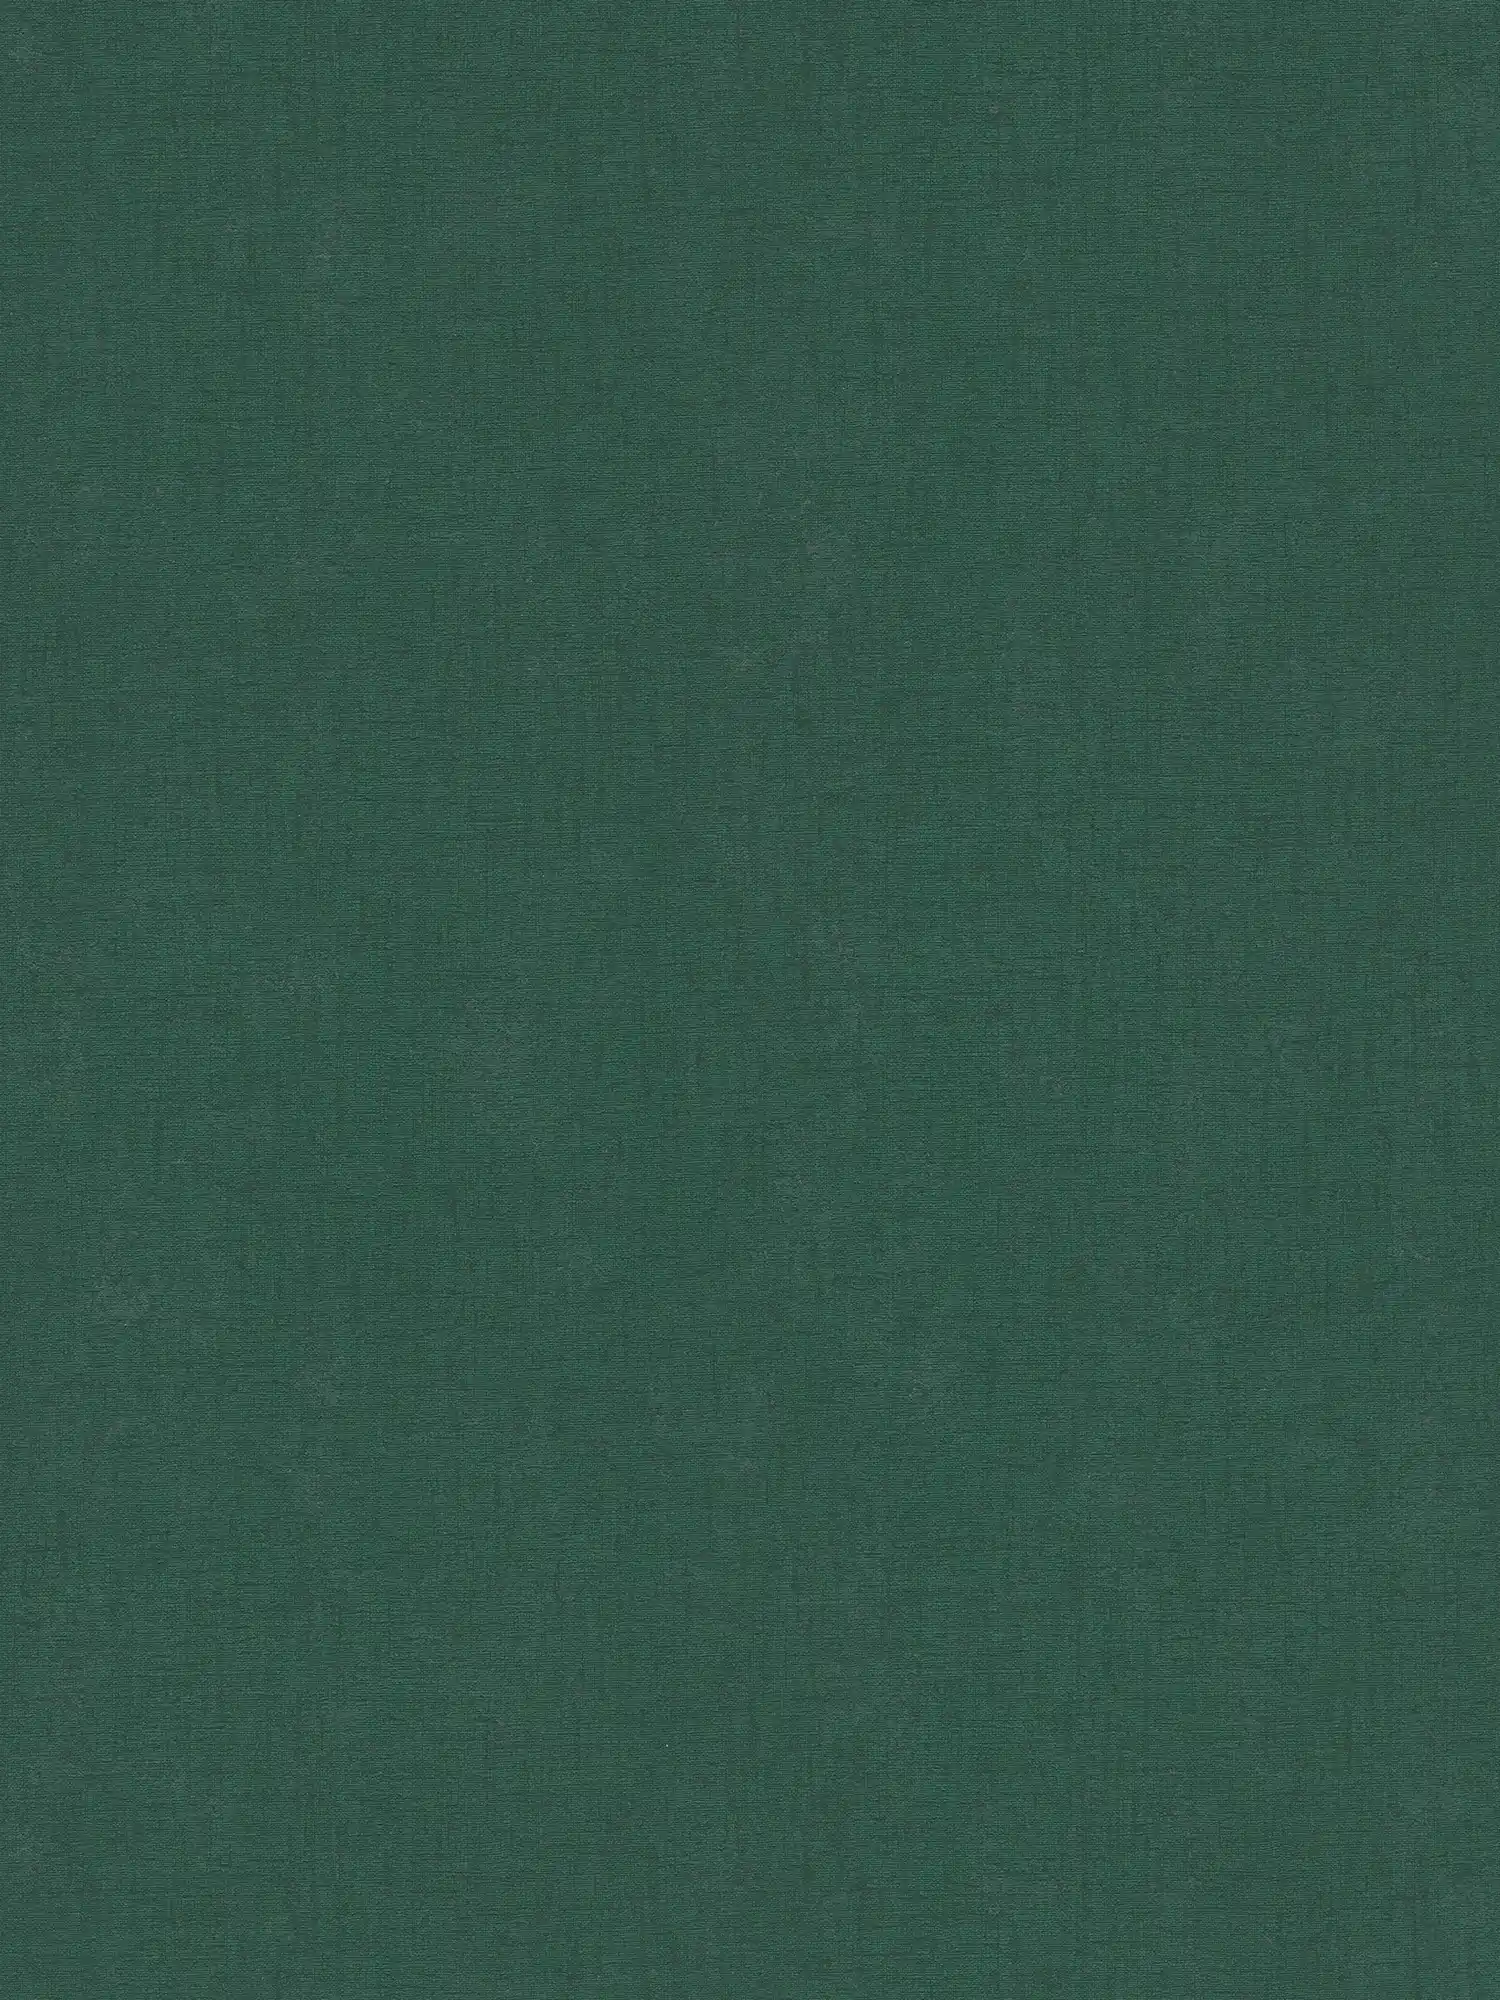 Papel pintado no tejido monocolor de textura ligera - verde, verde oscuro
